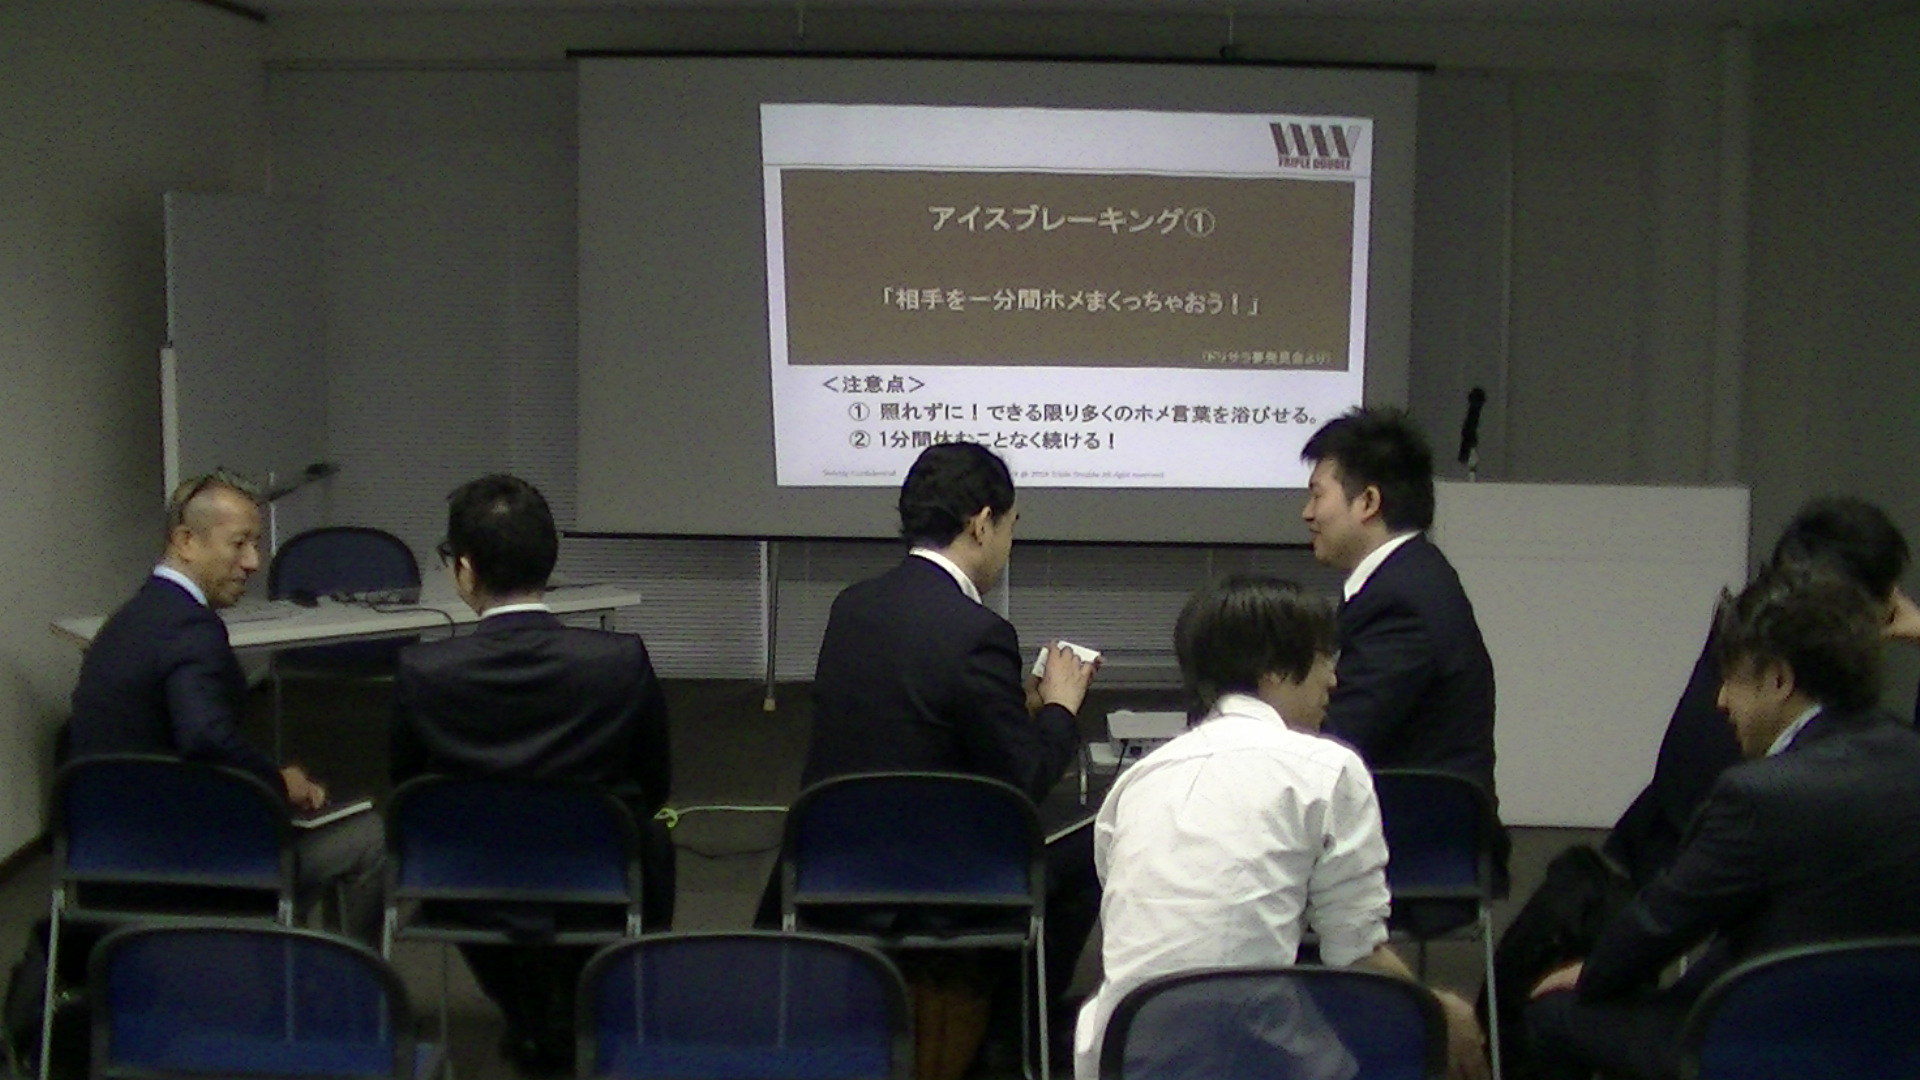 PIC 0792 - 猛獣塾入門講座開催しました。